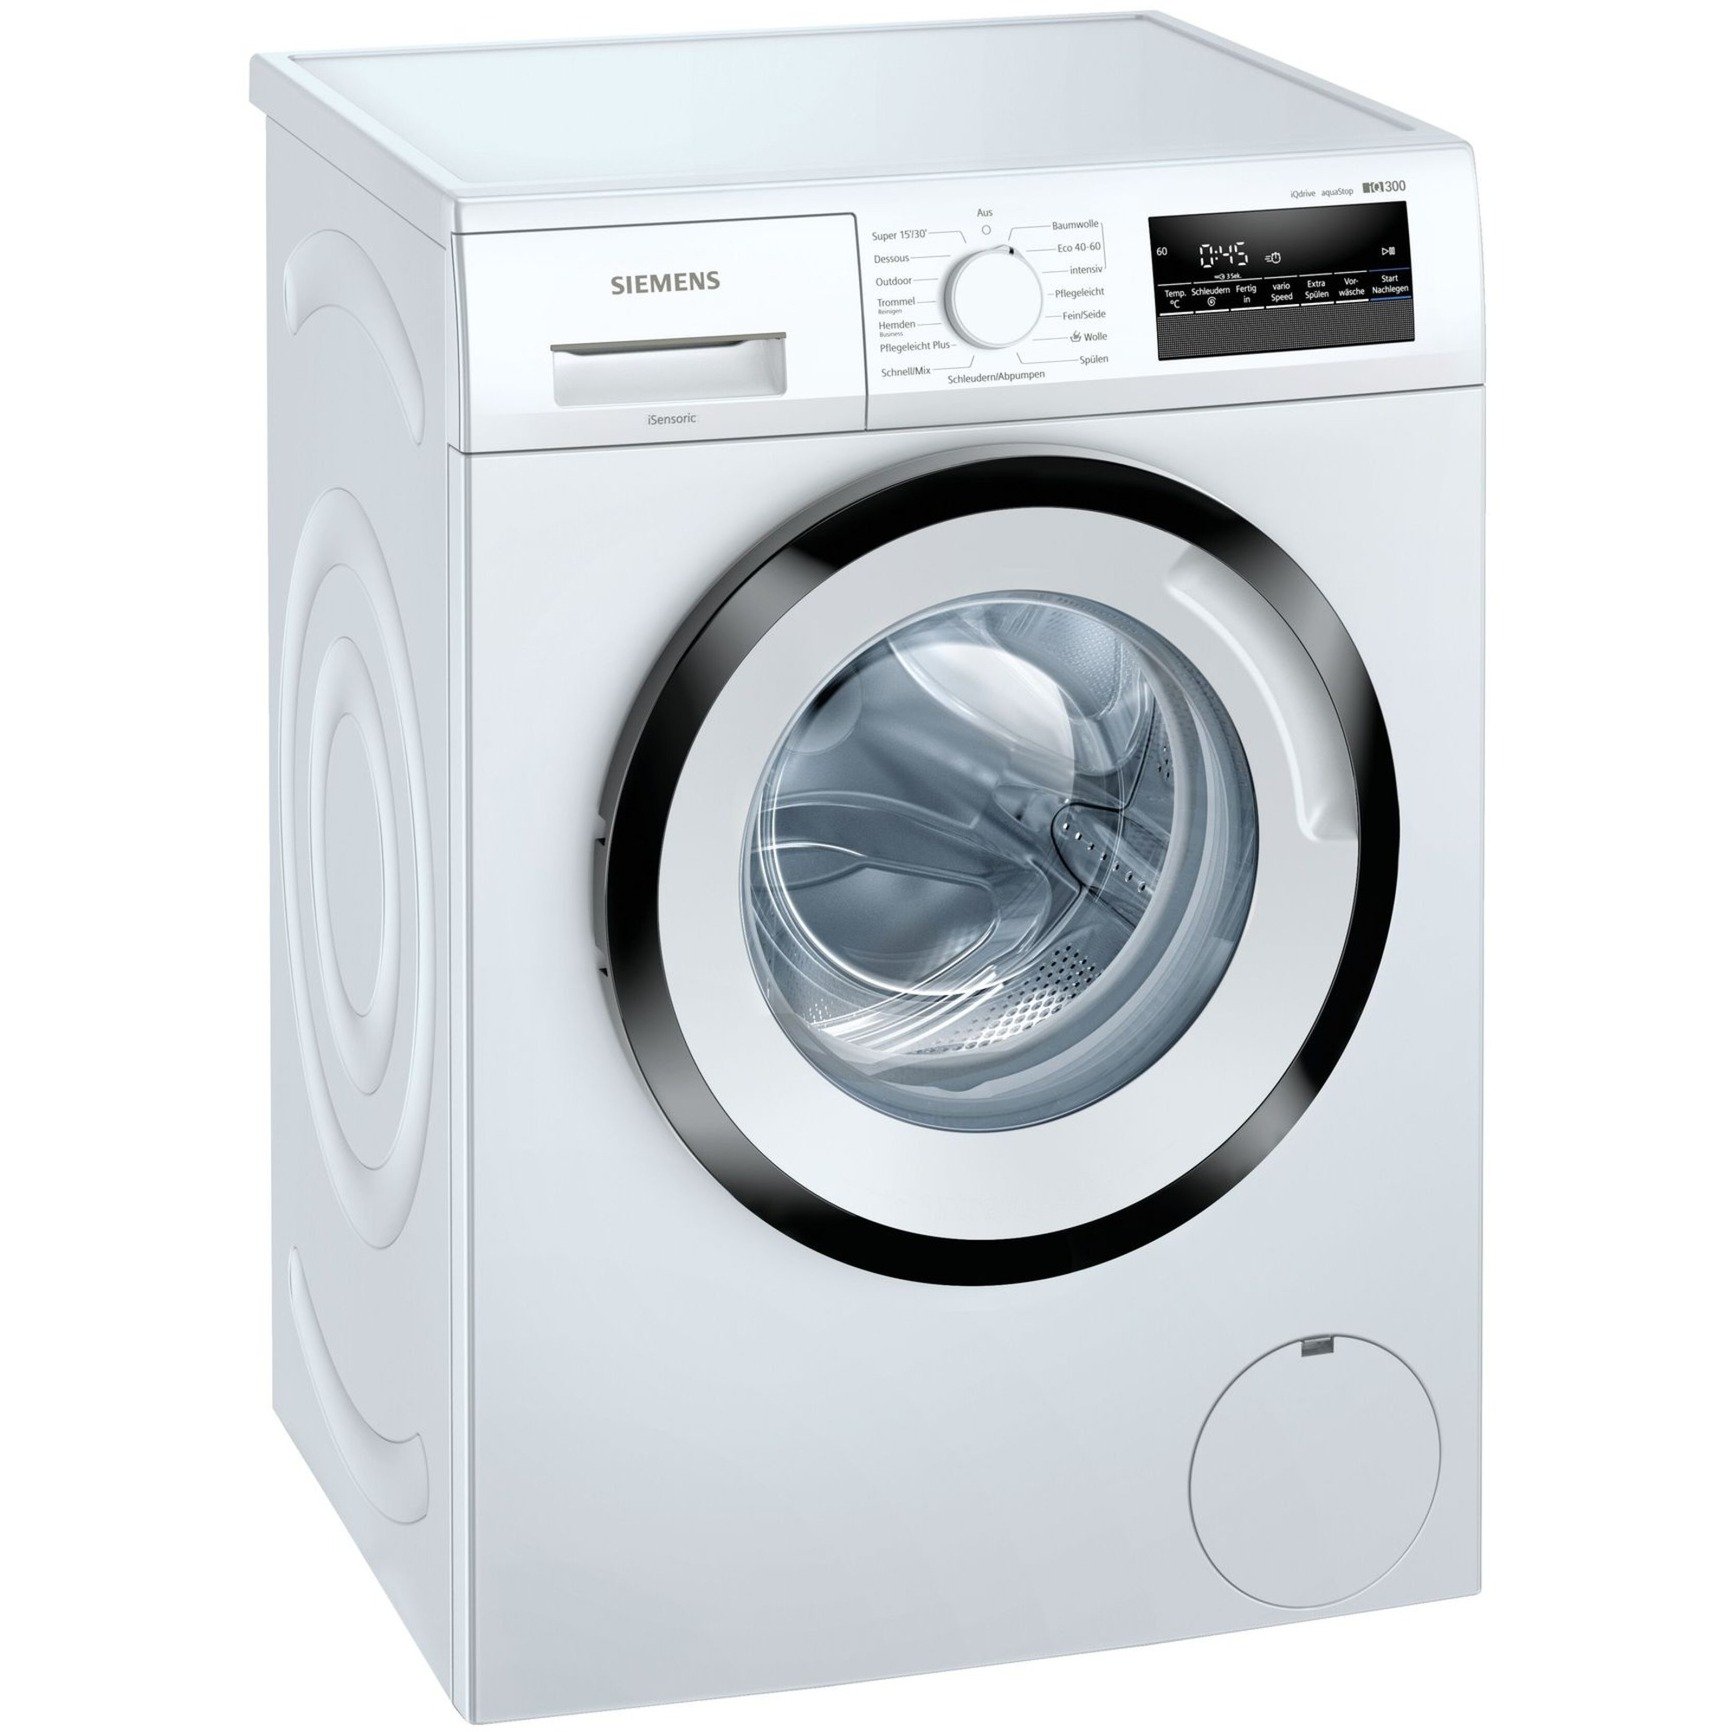 WM14N242 iQ300, Waschmaschine